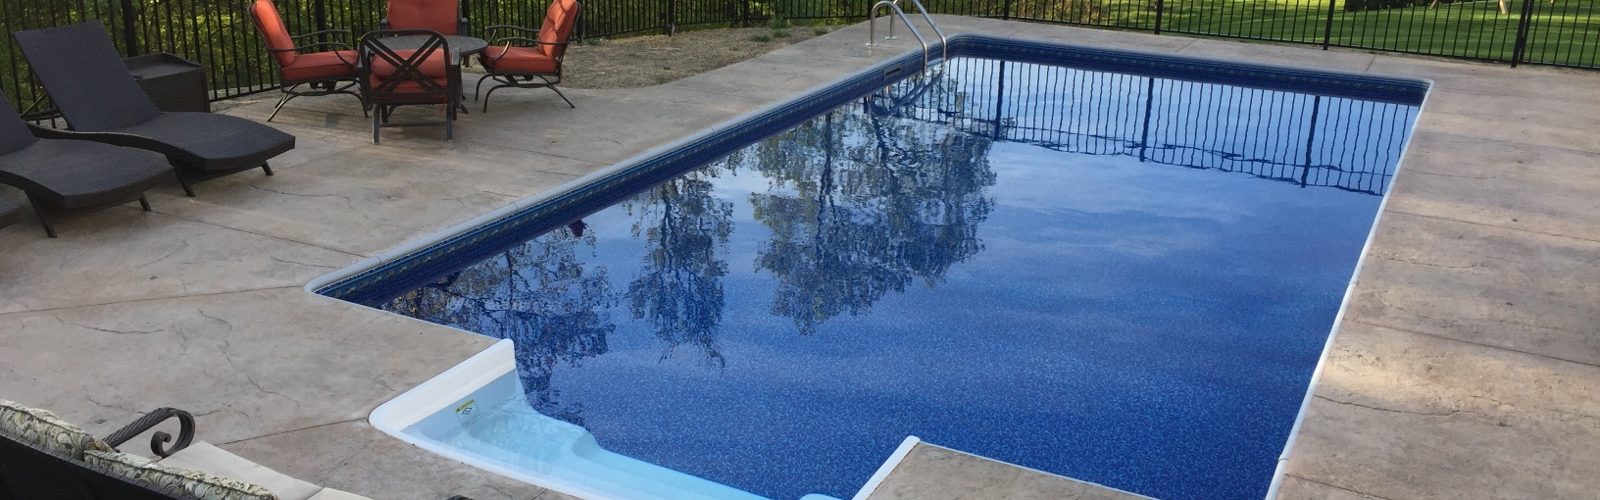 EZ Aqua Pool with Stamped Concrete Deck